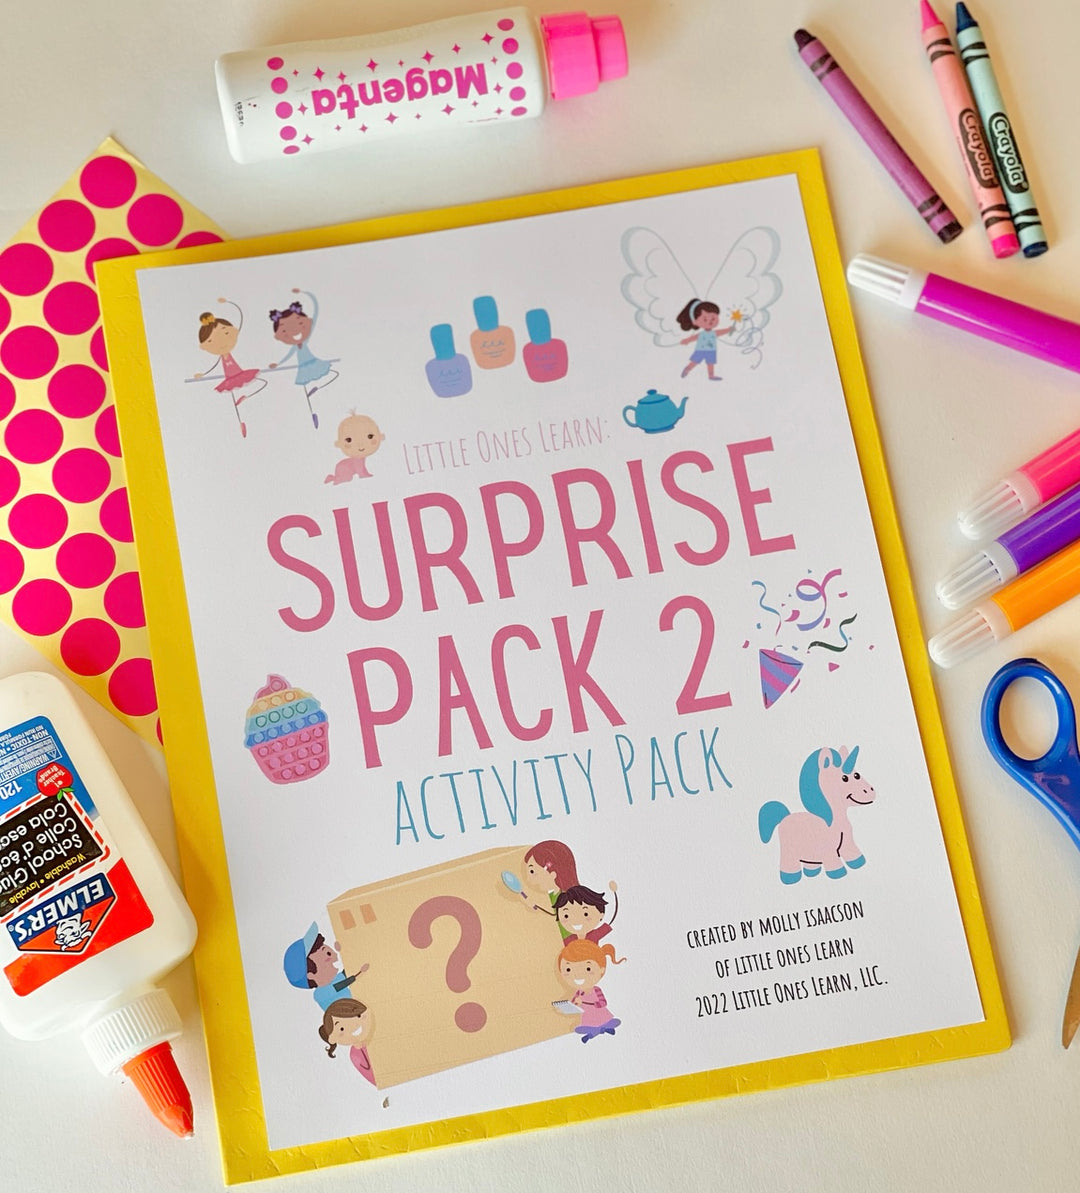 LOL Surprise Pack 2 Activity Pack